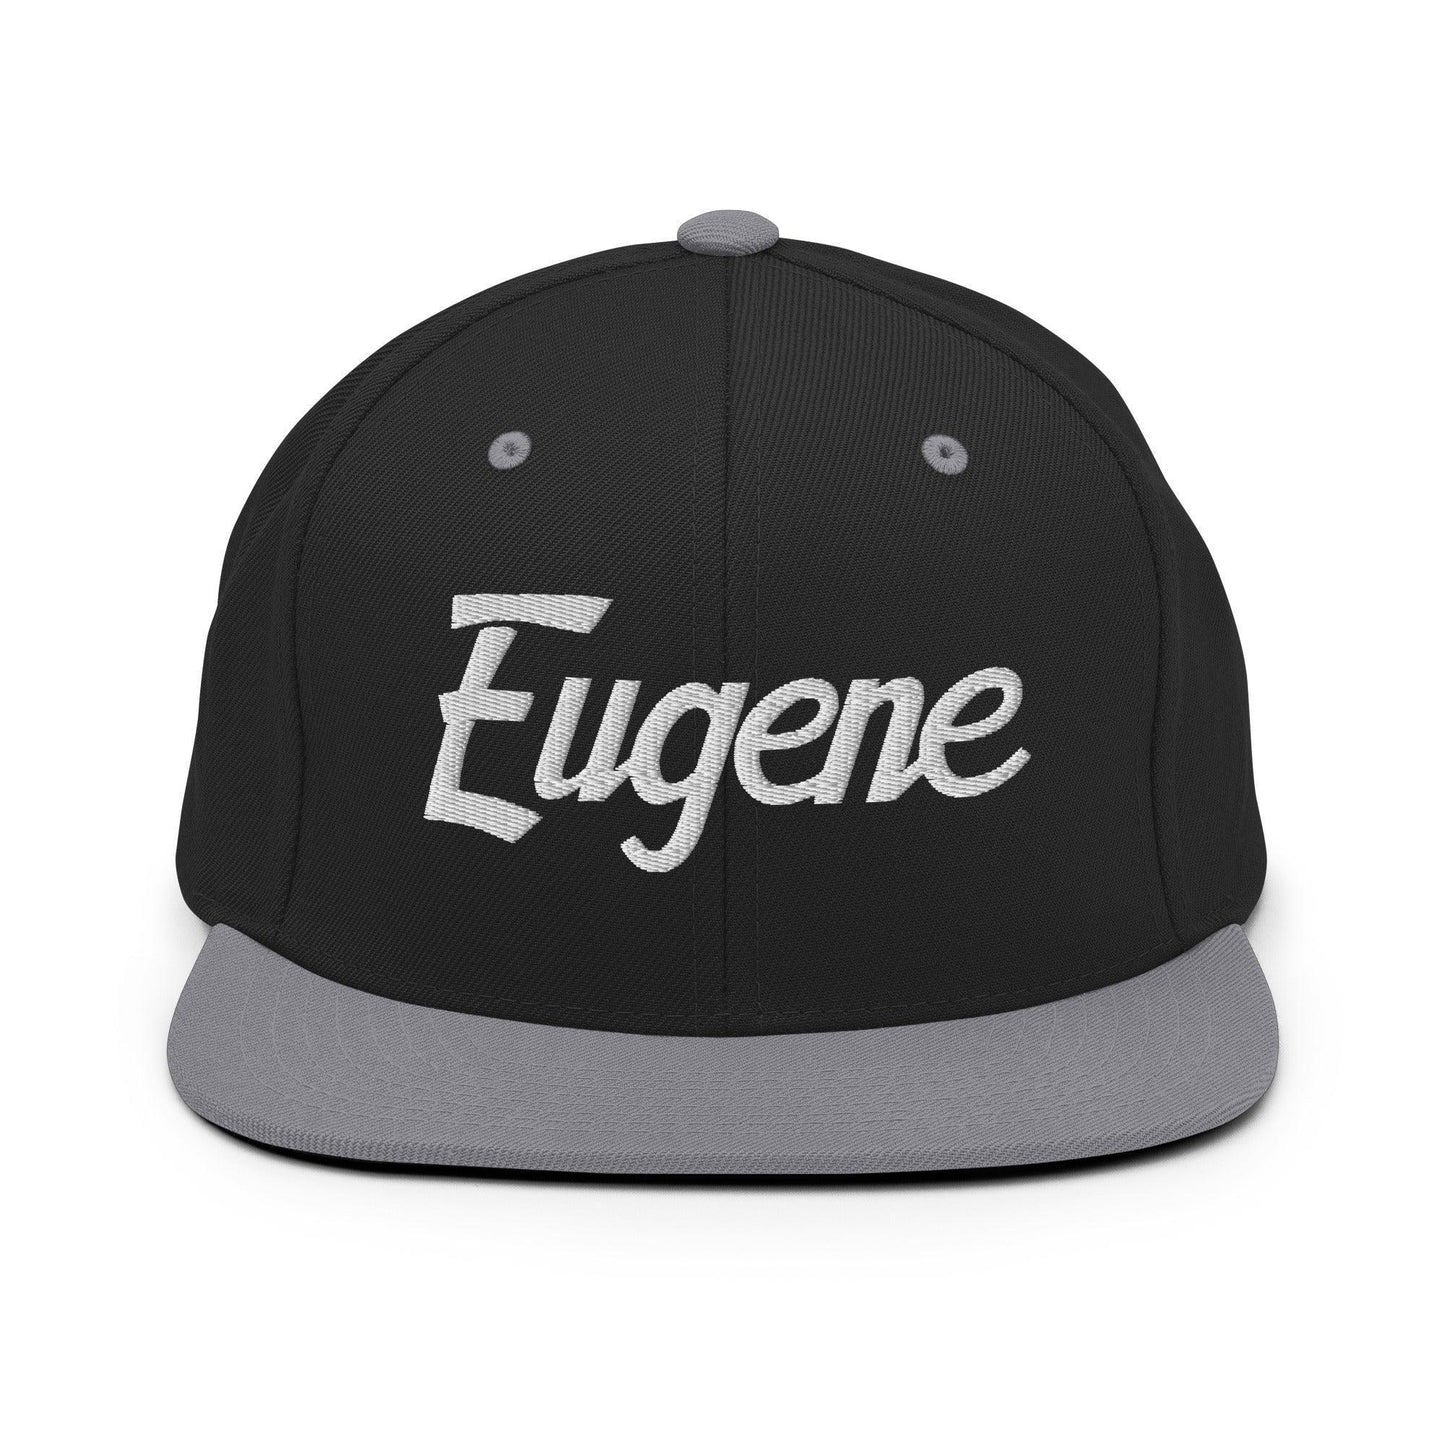 Eugene Script Snapback Hat Black Silver